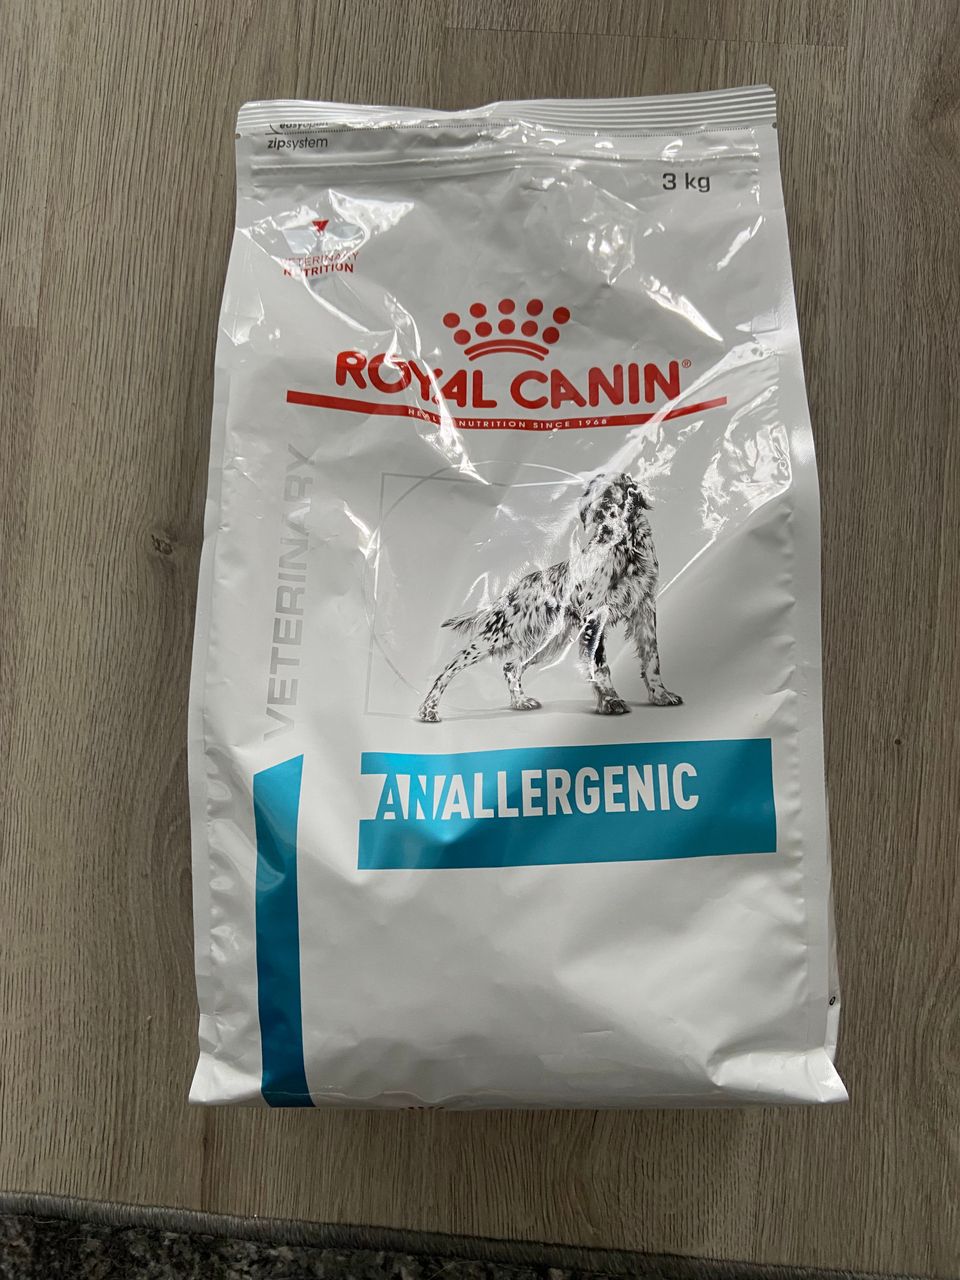 Royal Canin anallergenic